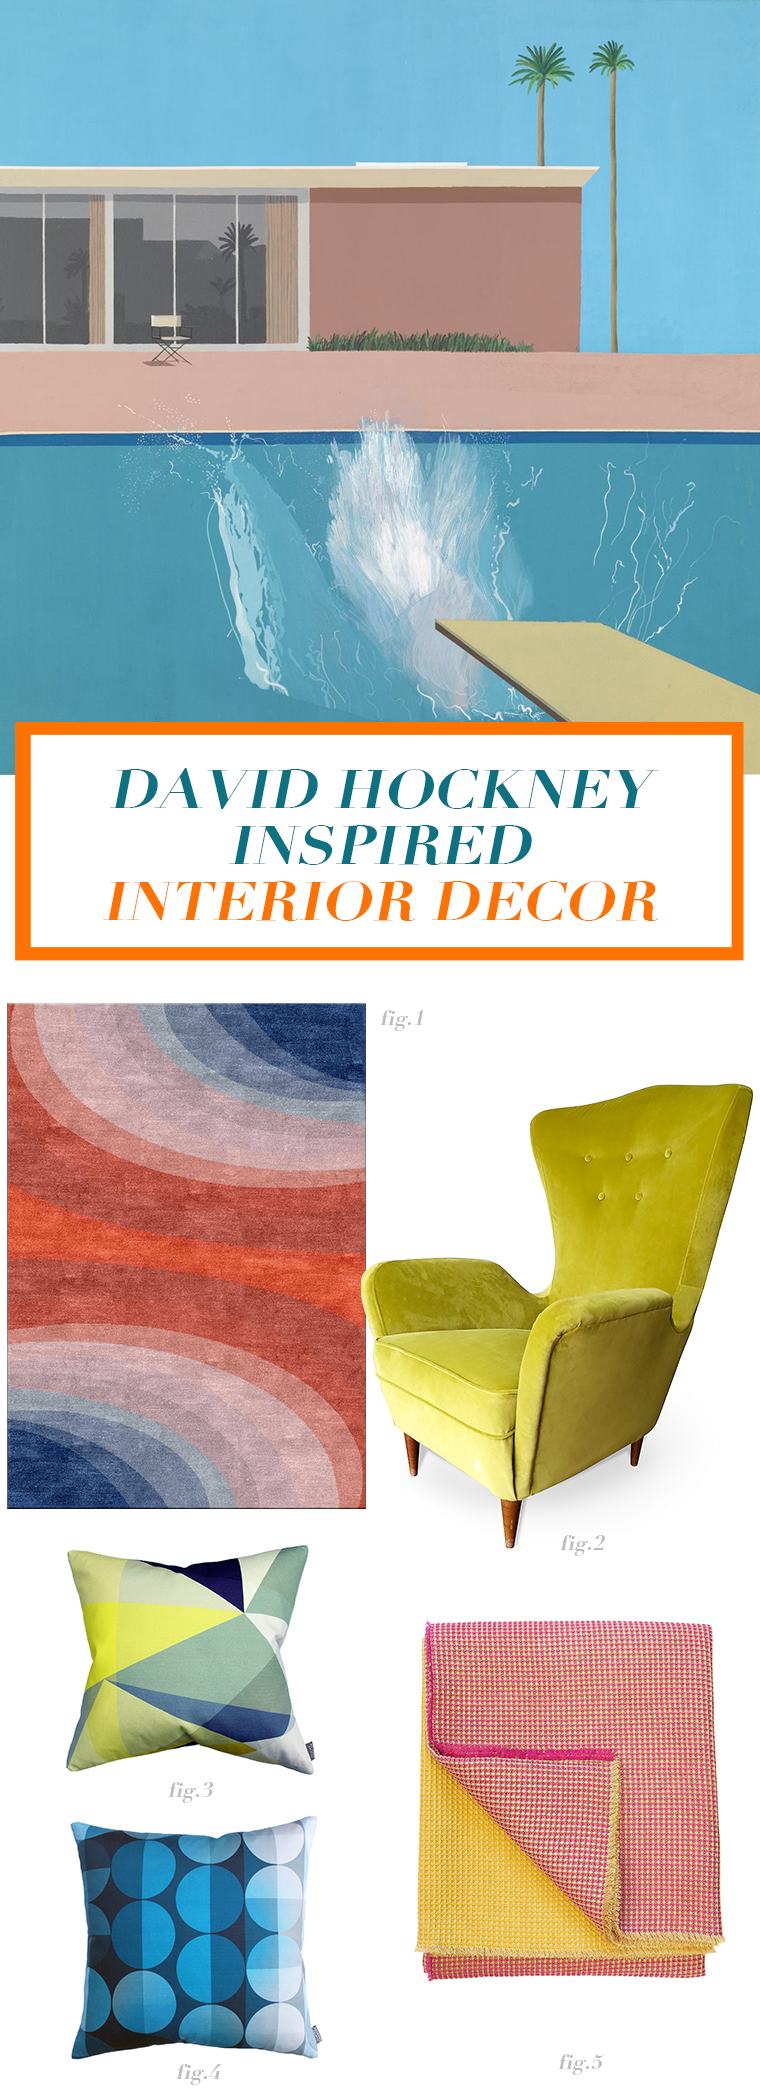 David Hockney Inspired Interior Design Architecture Design